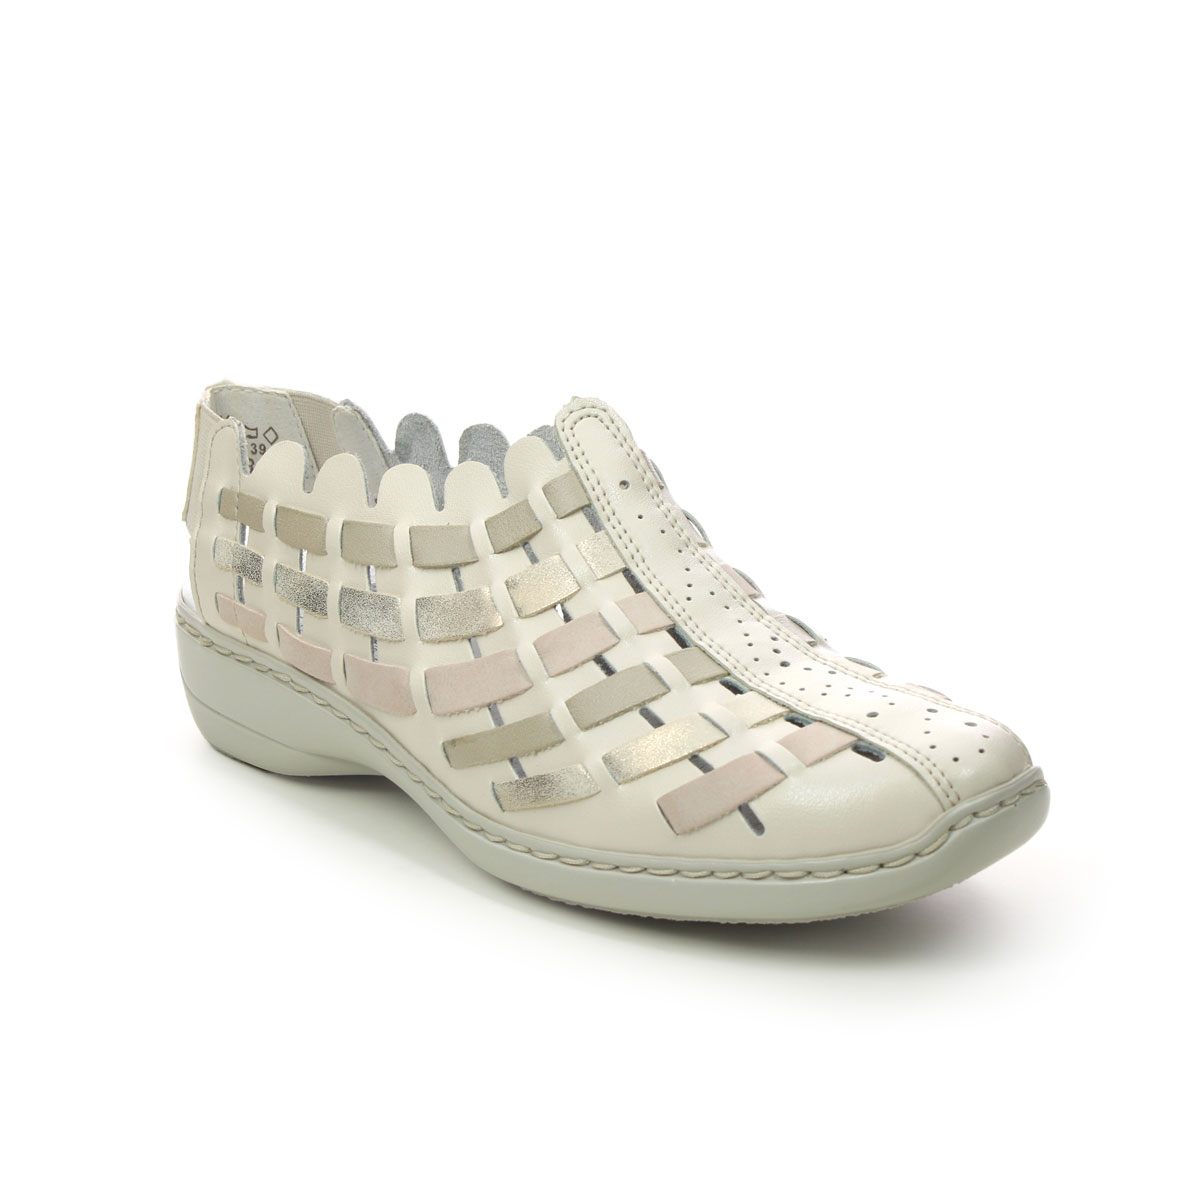 Rieker Dorsina Beige Gold Womens Closed Toe Sandals 413V8-60 In Size 38 In Plain Beige Gold